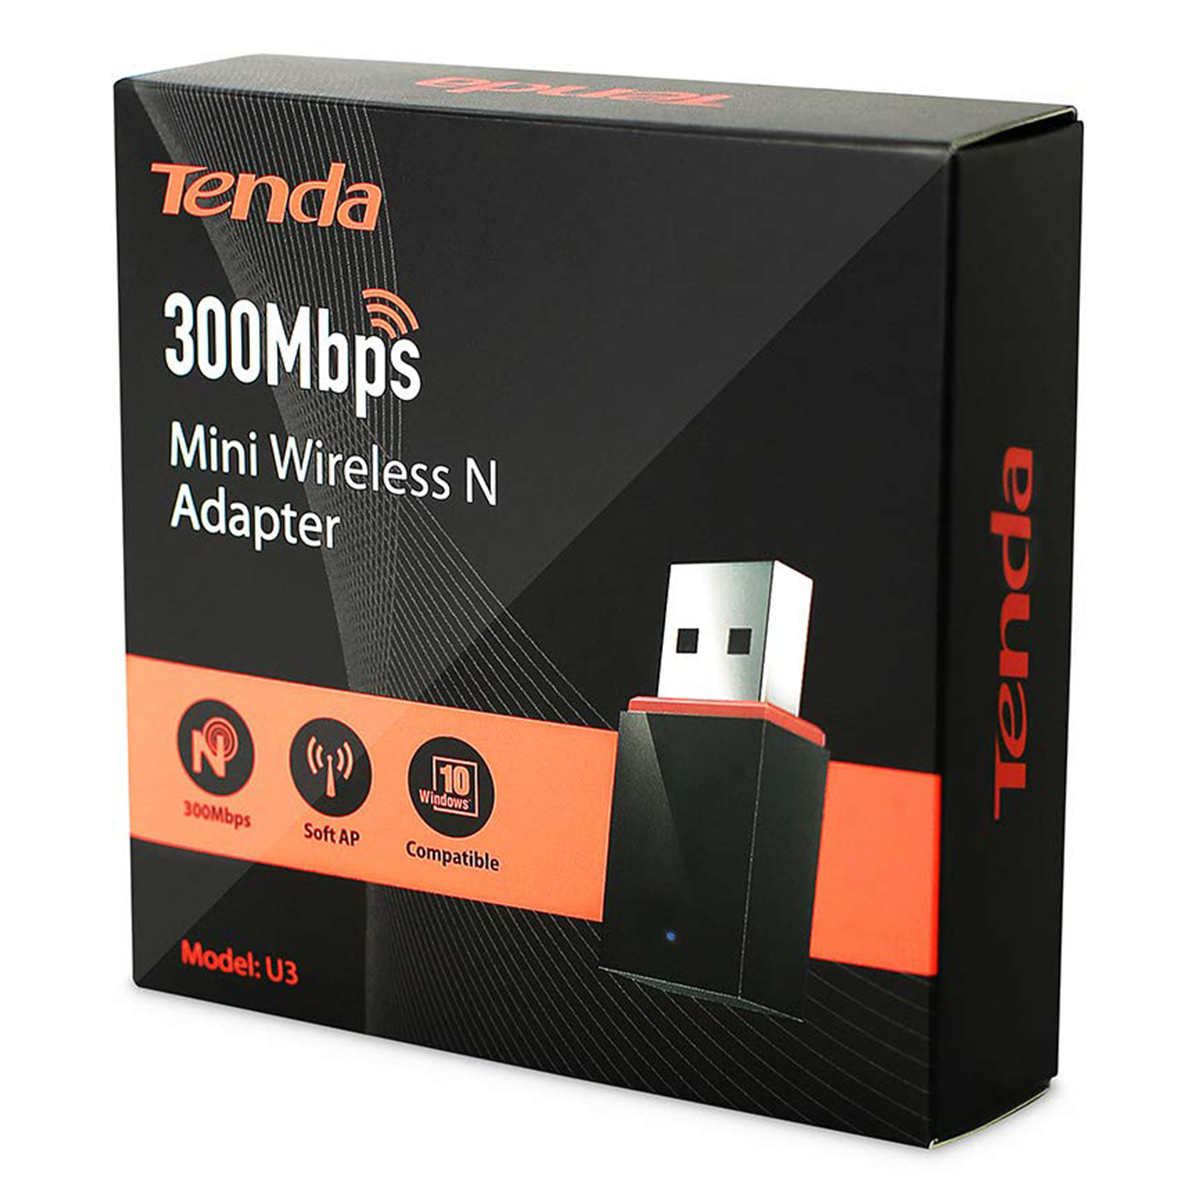 TENDA TE-U3 USB WIFI 300MBPS DVR SUPPORTED